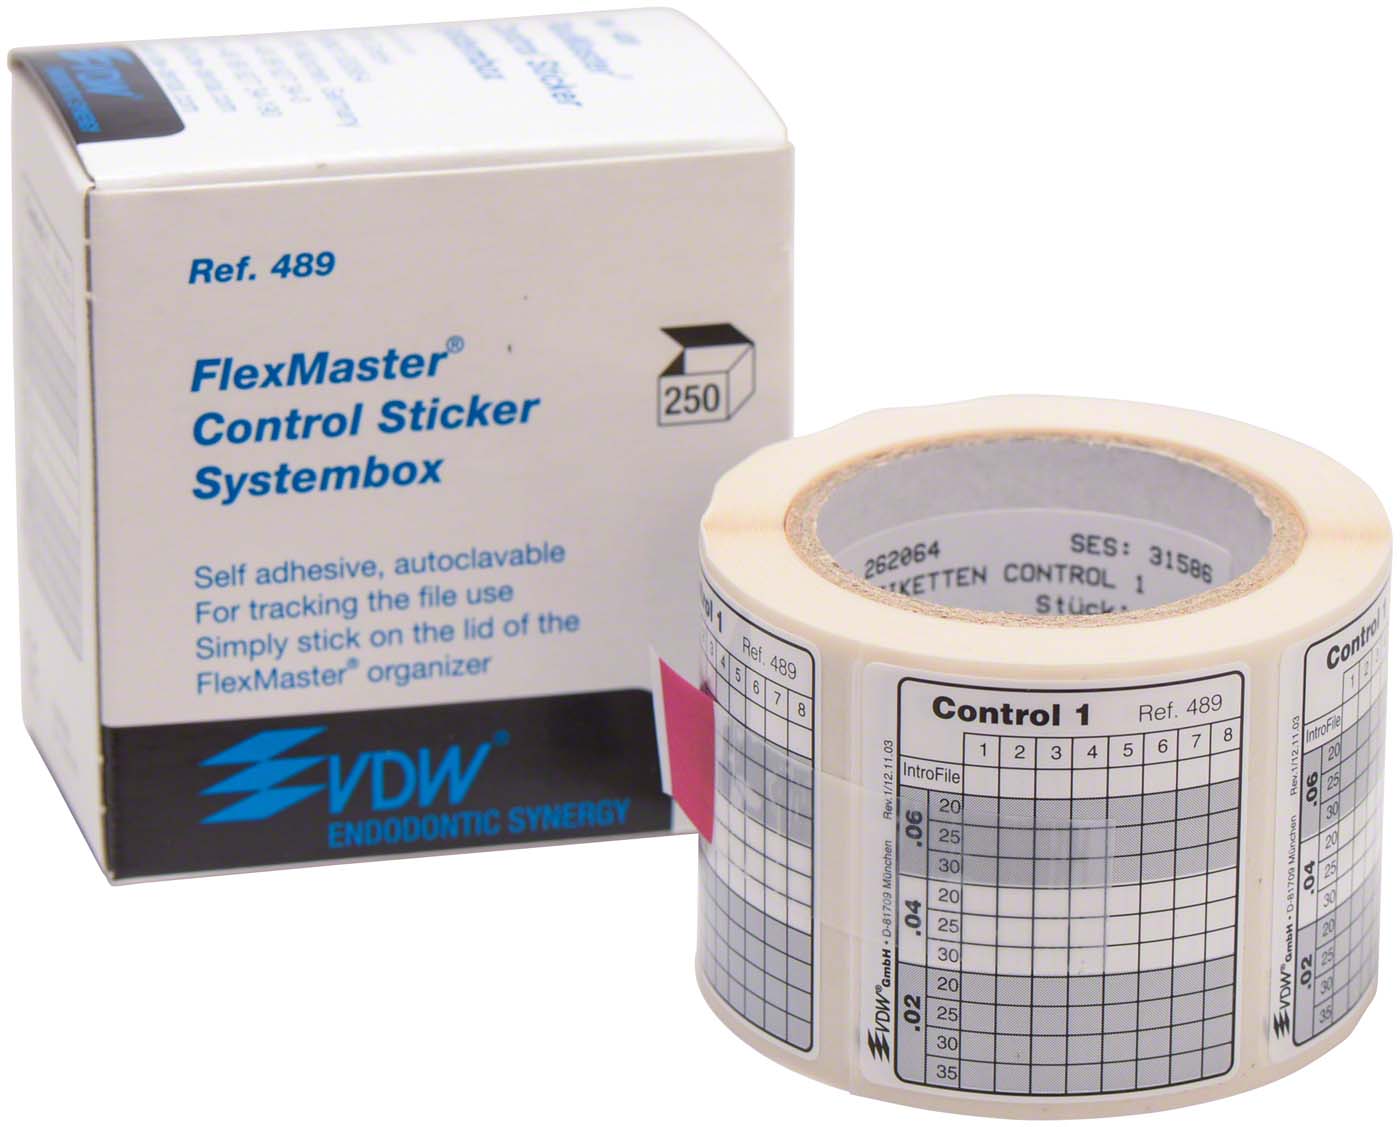 FlexMaster® Control Sticker Systembox VDW